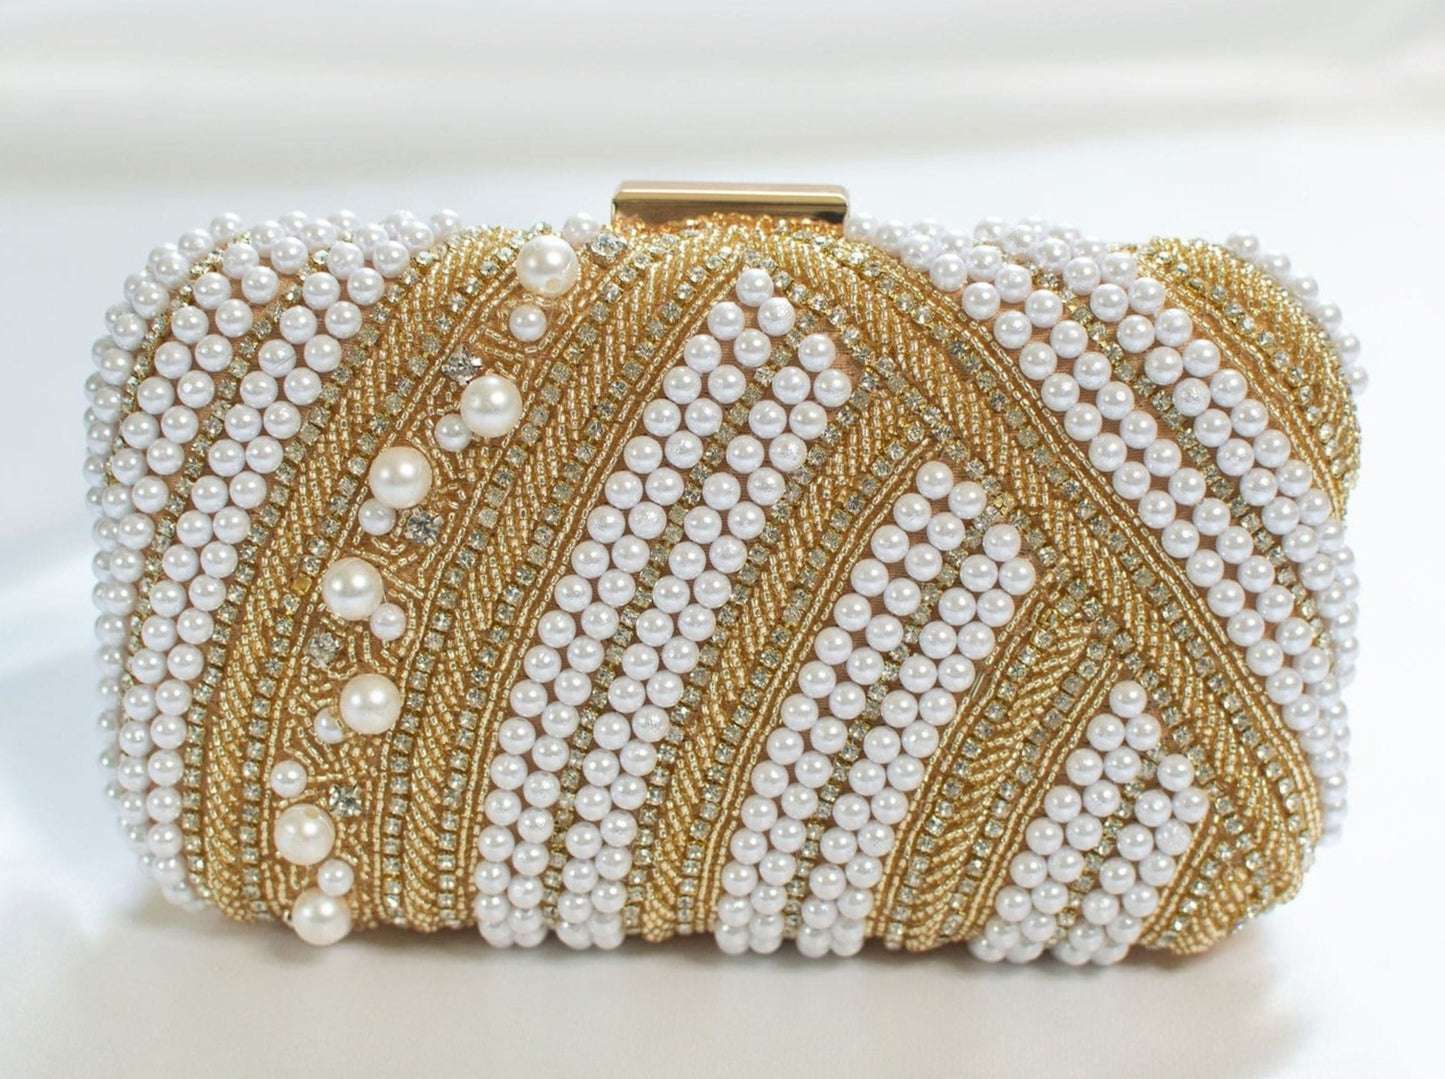 White & Gold Clutch with Pearl & Rhinestone embellishments 